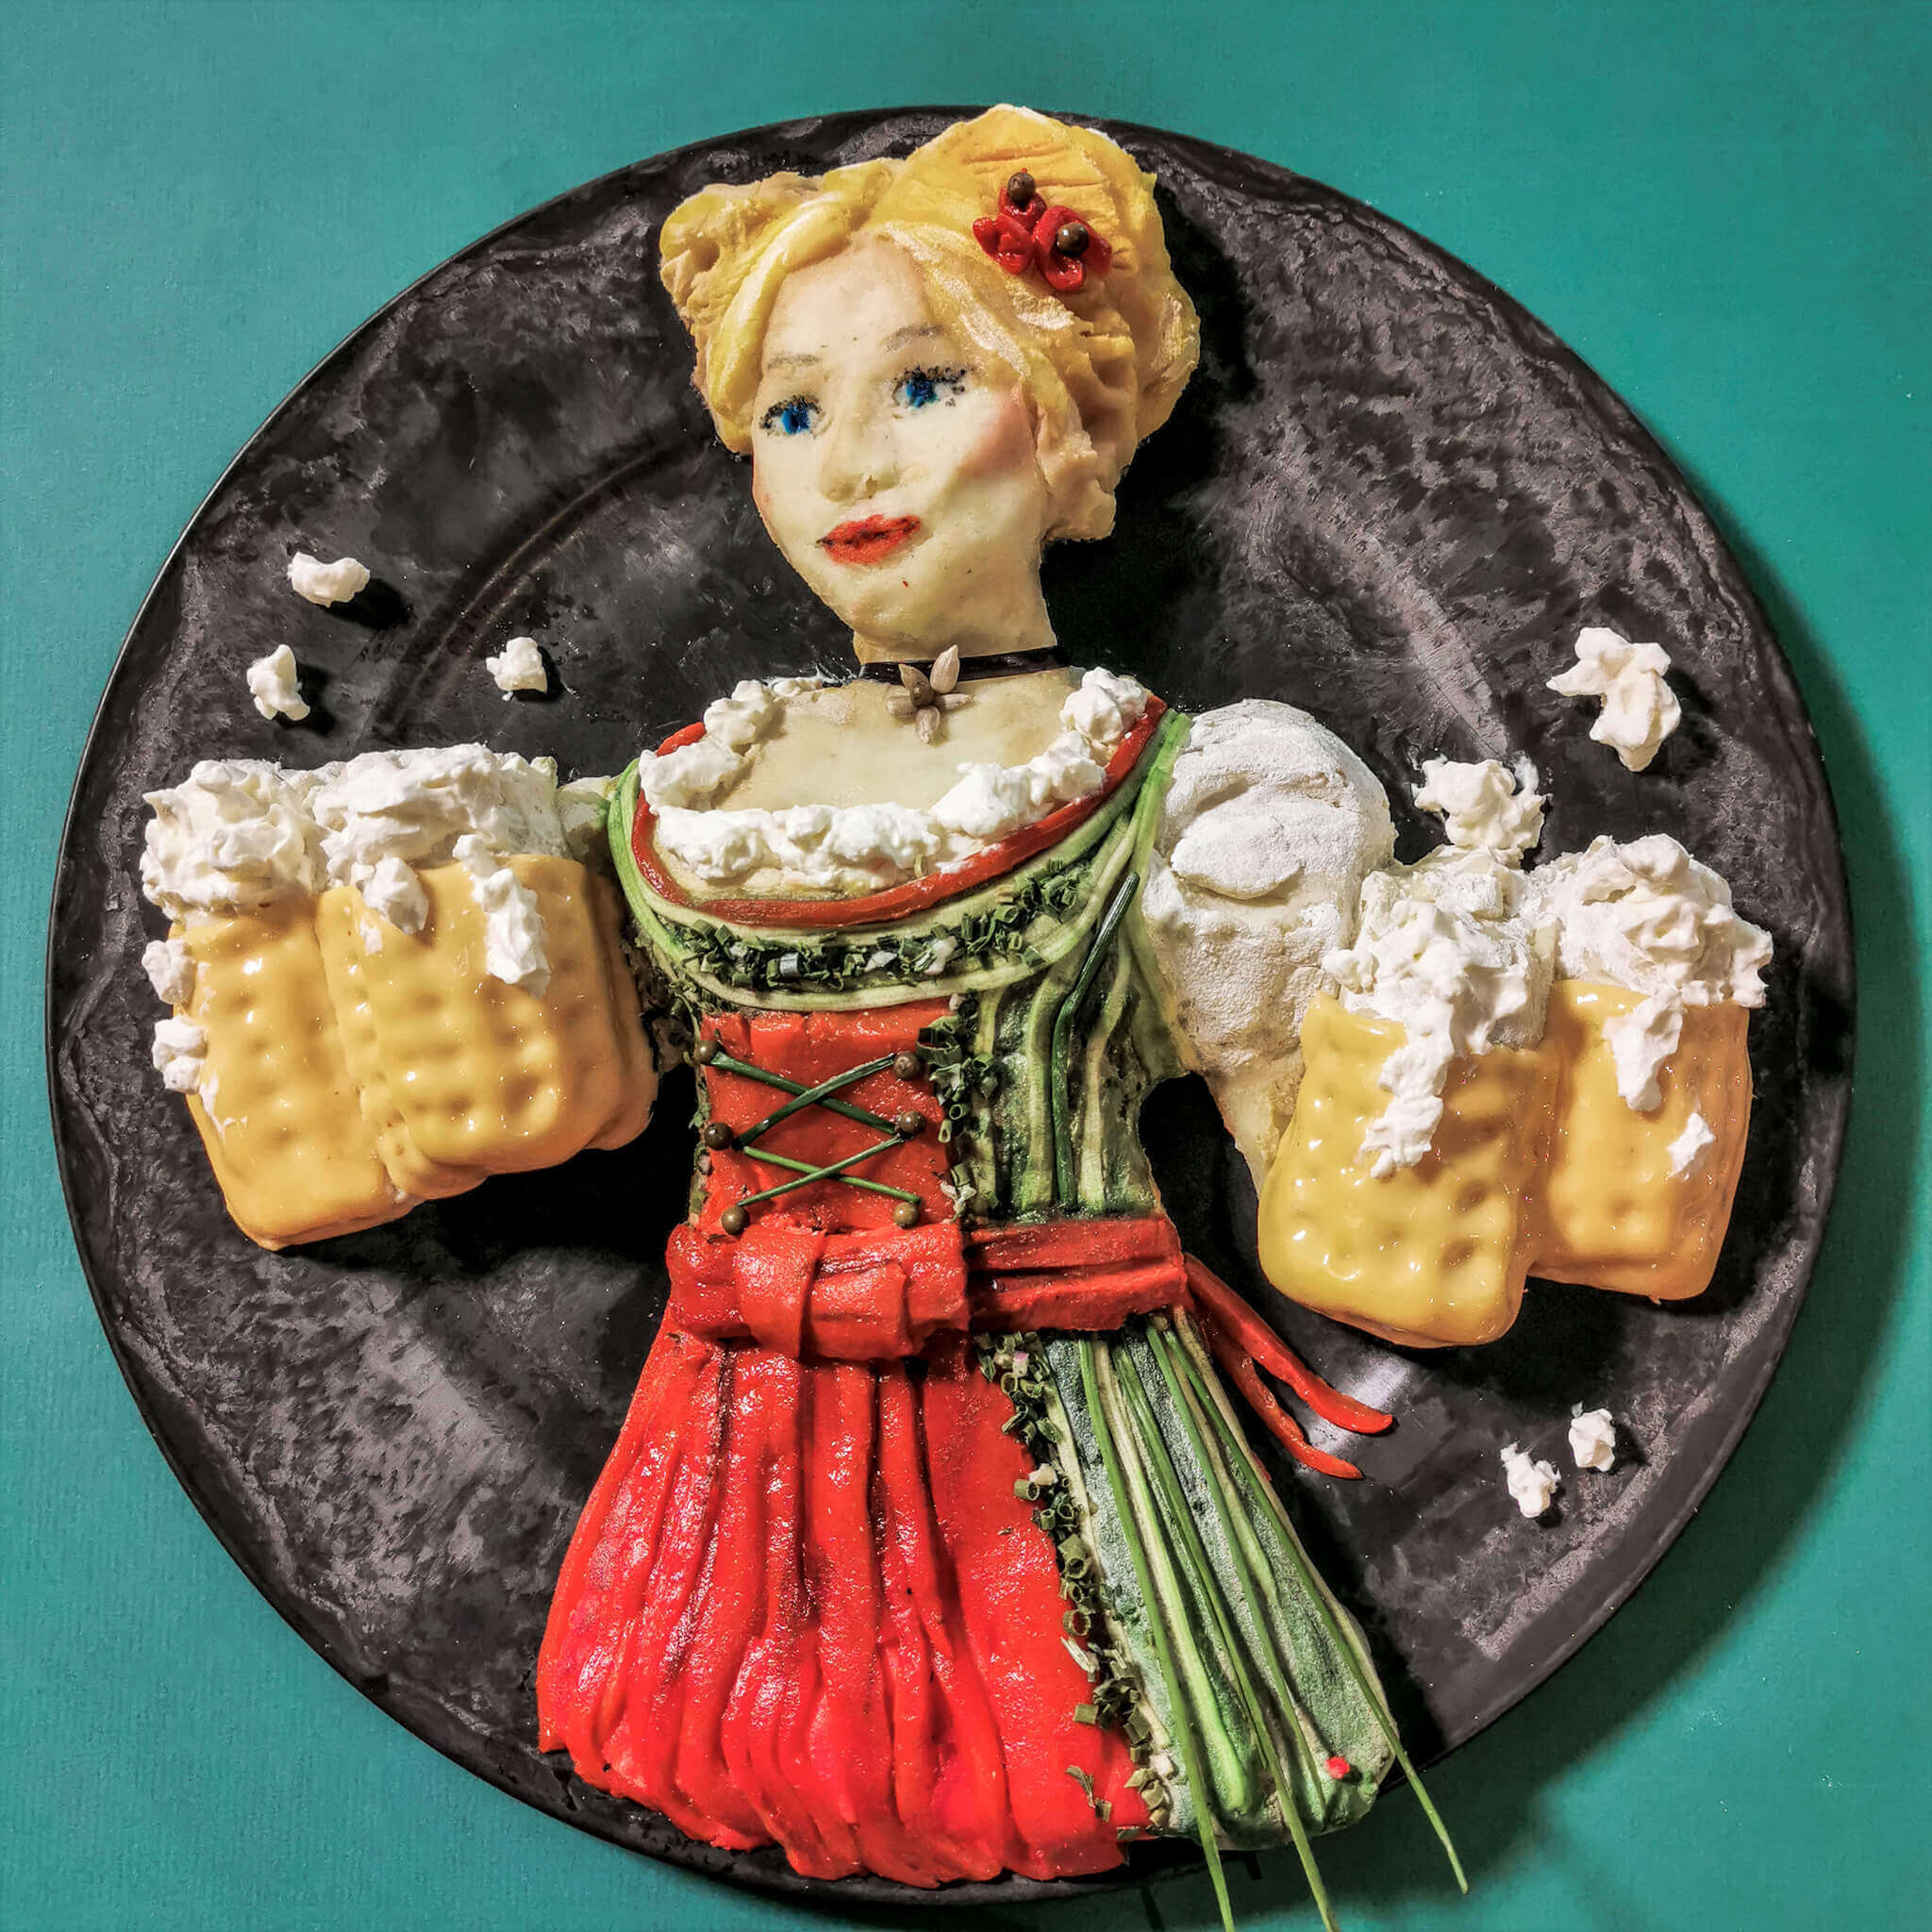 Food art creation by Jolanda Stokkermans with reference to Munich Oktoberfest